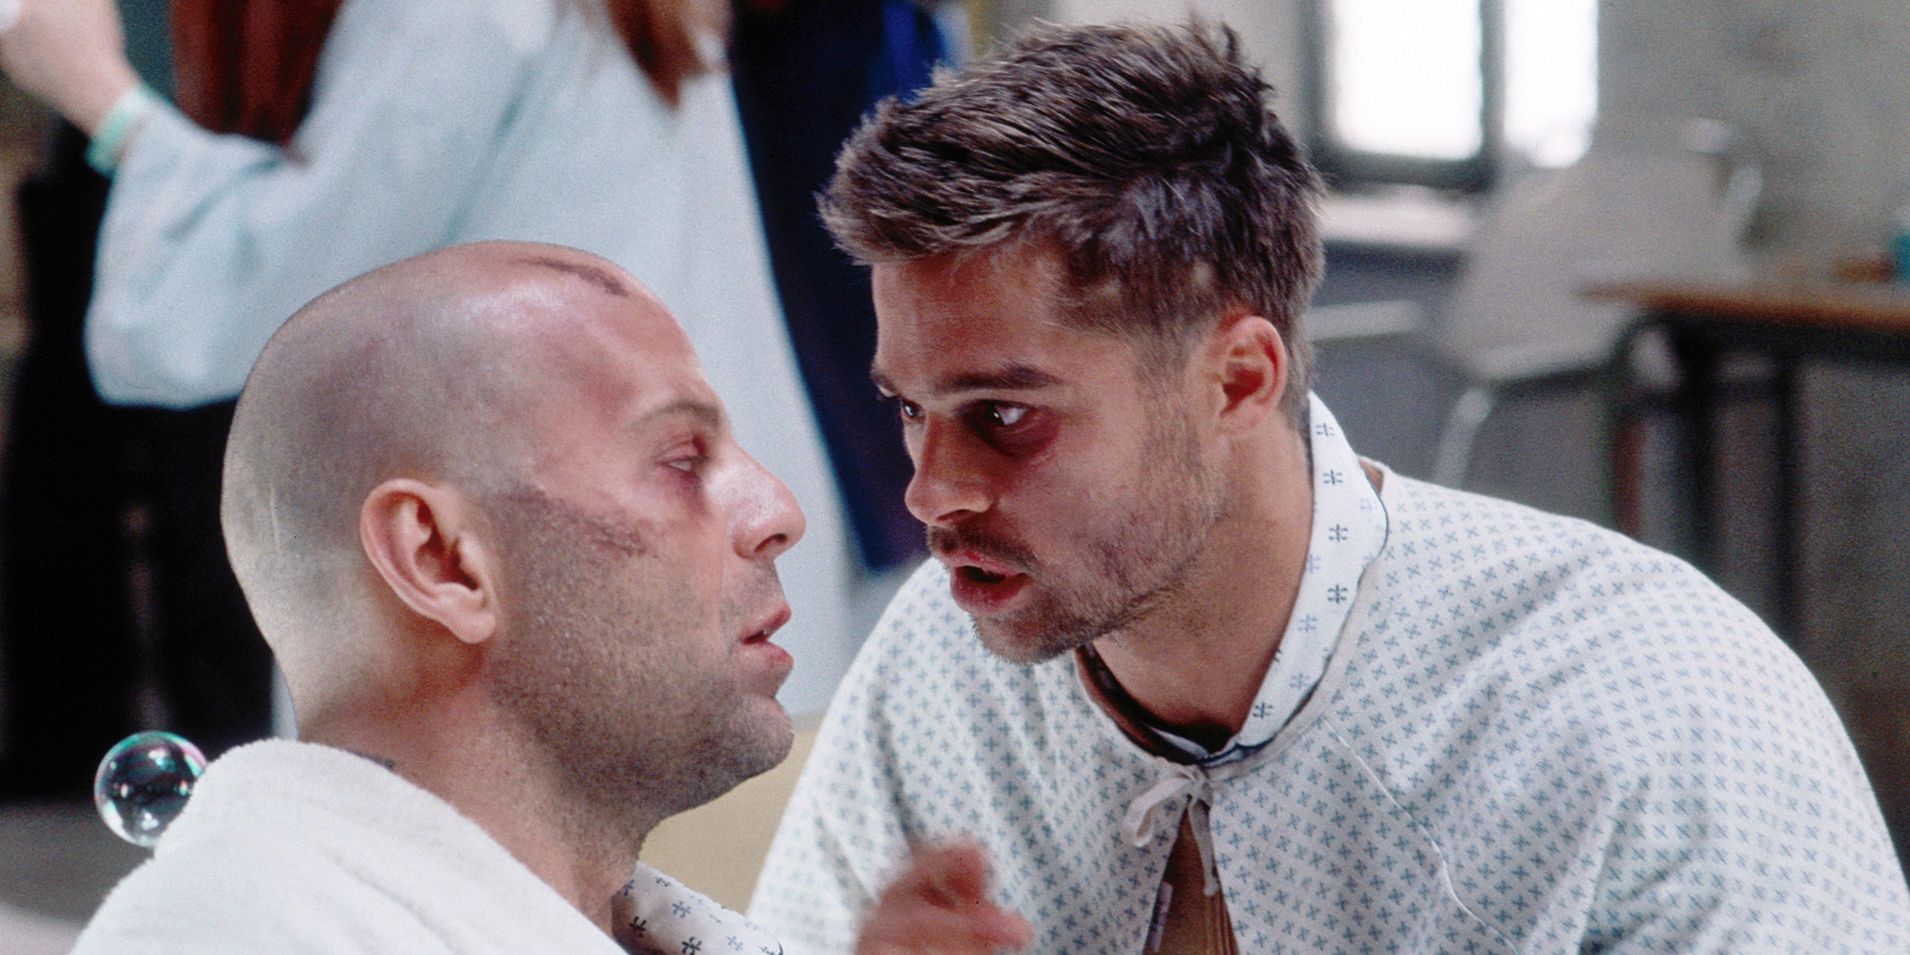 Bruce Willis and Brad Pitt in Hospital Robes in 12 Monkeys